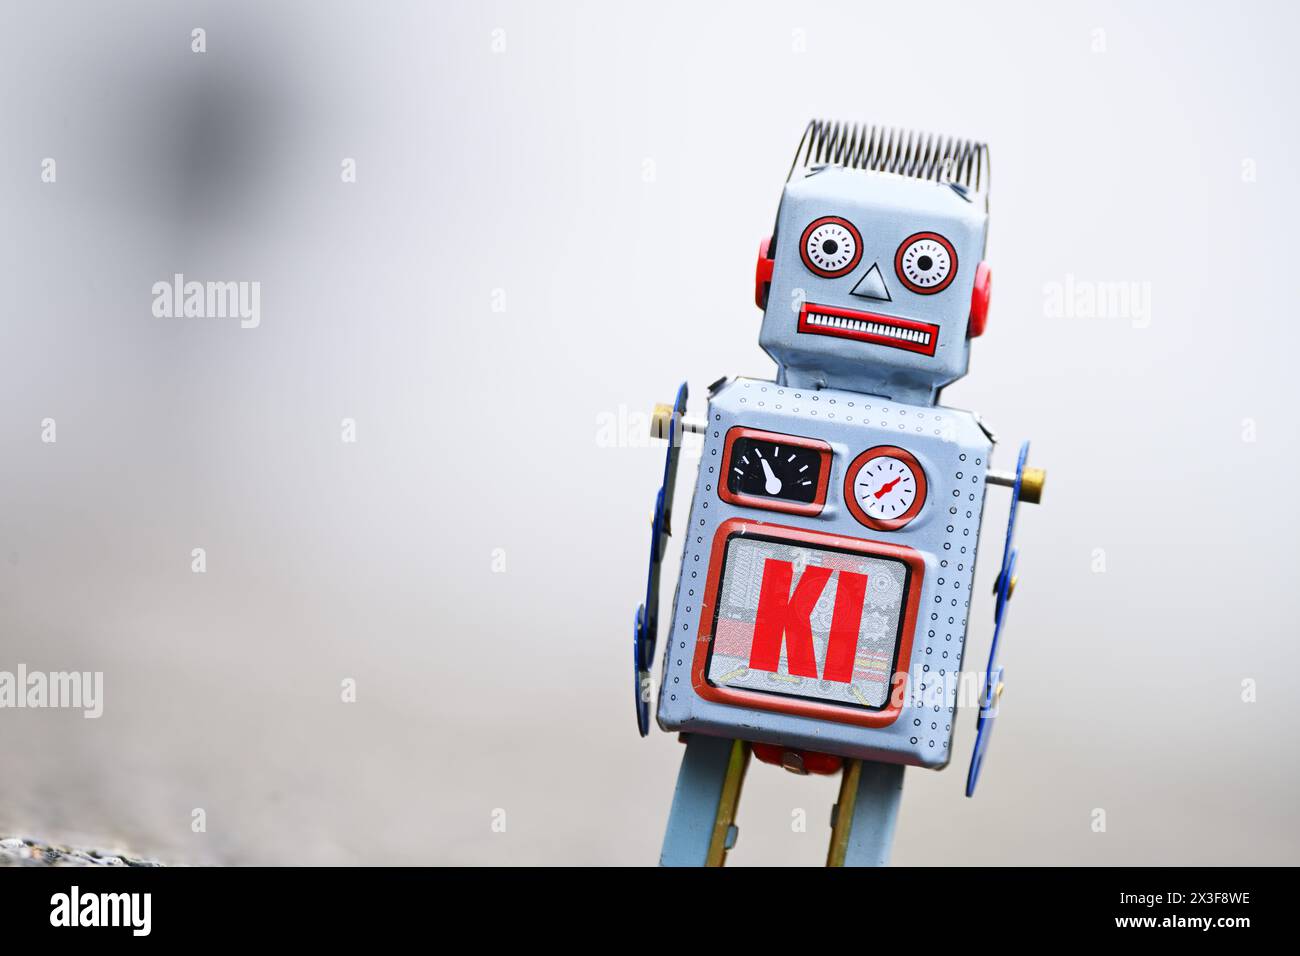 Robot Figure With AI Label, Photomontage Stock Photo